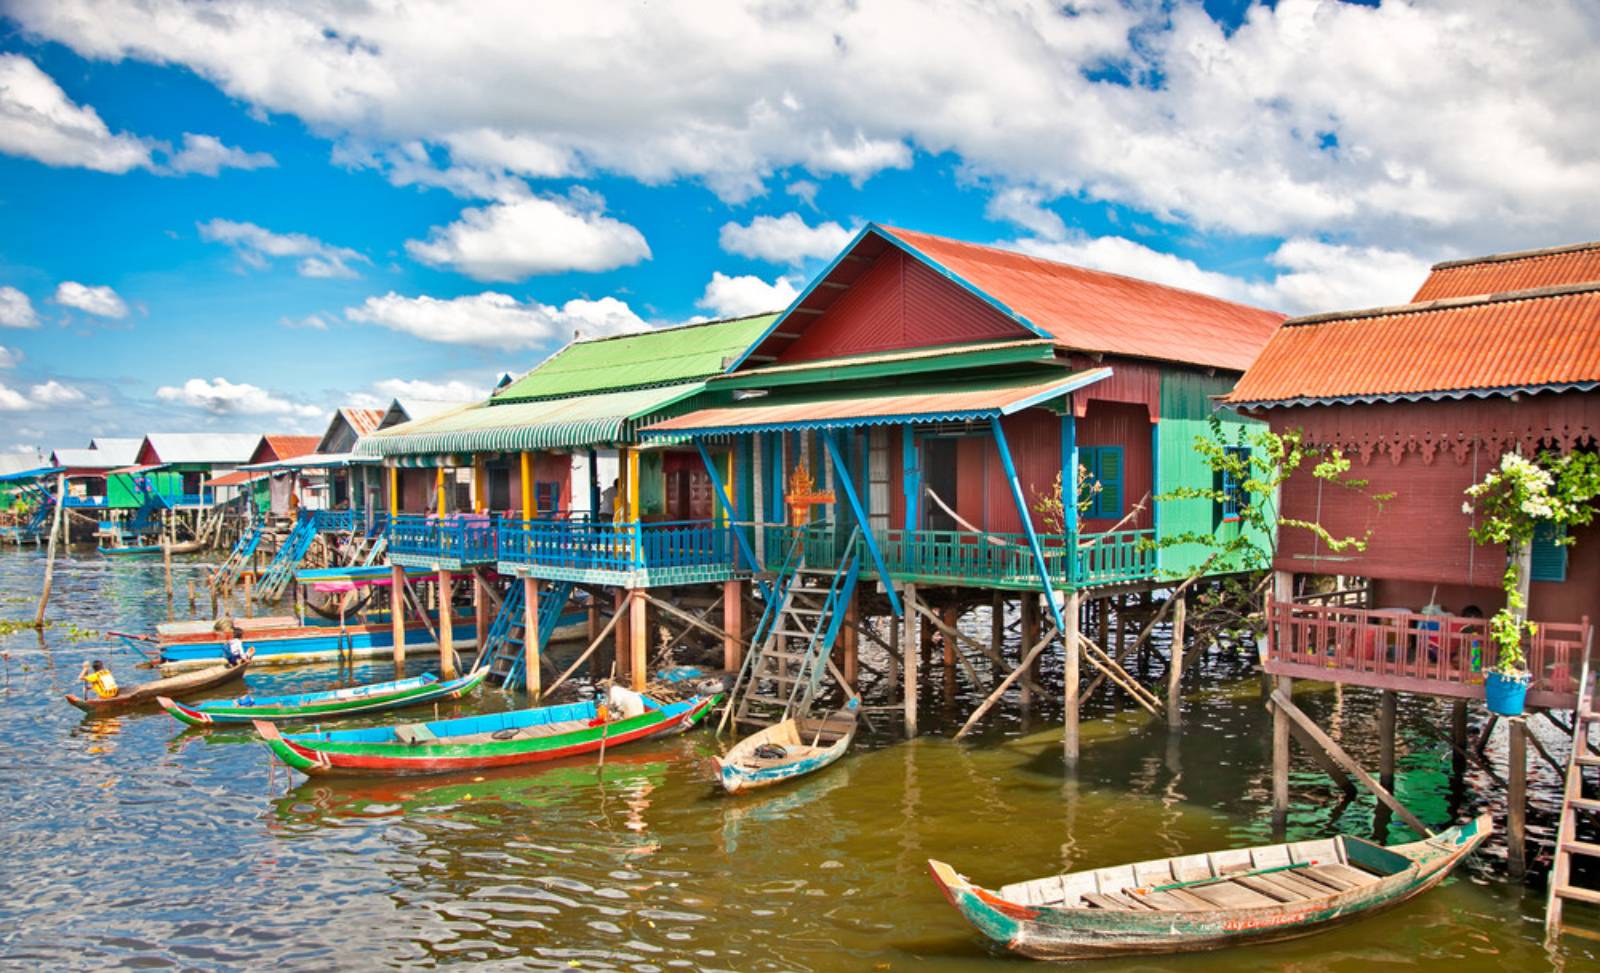 Local life at Tonle Sap Lake